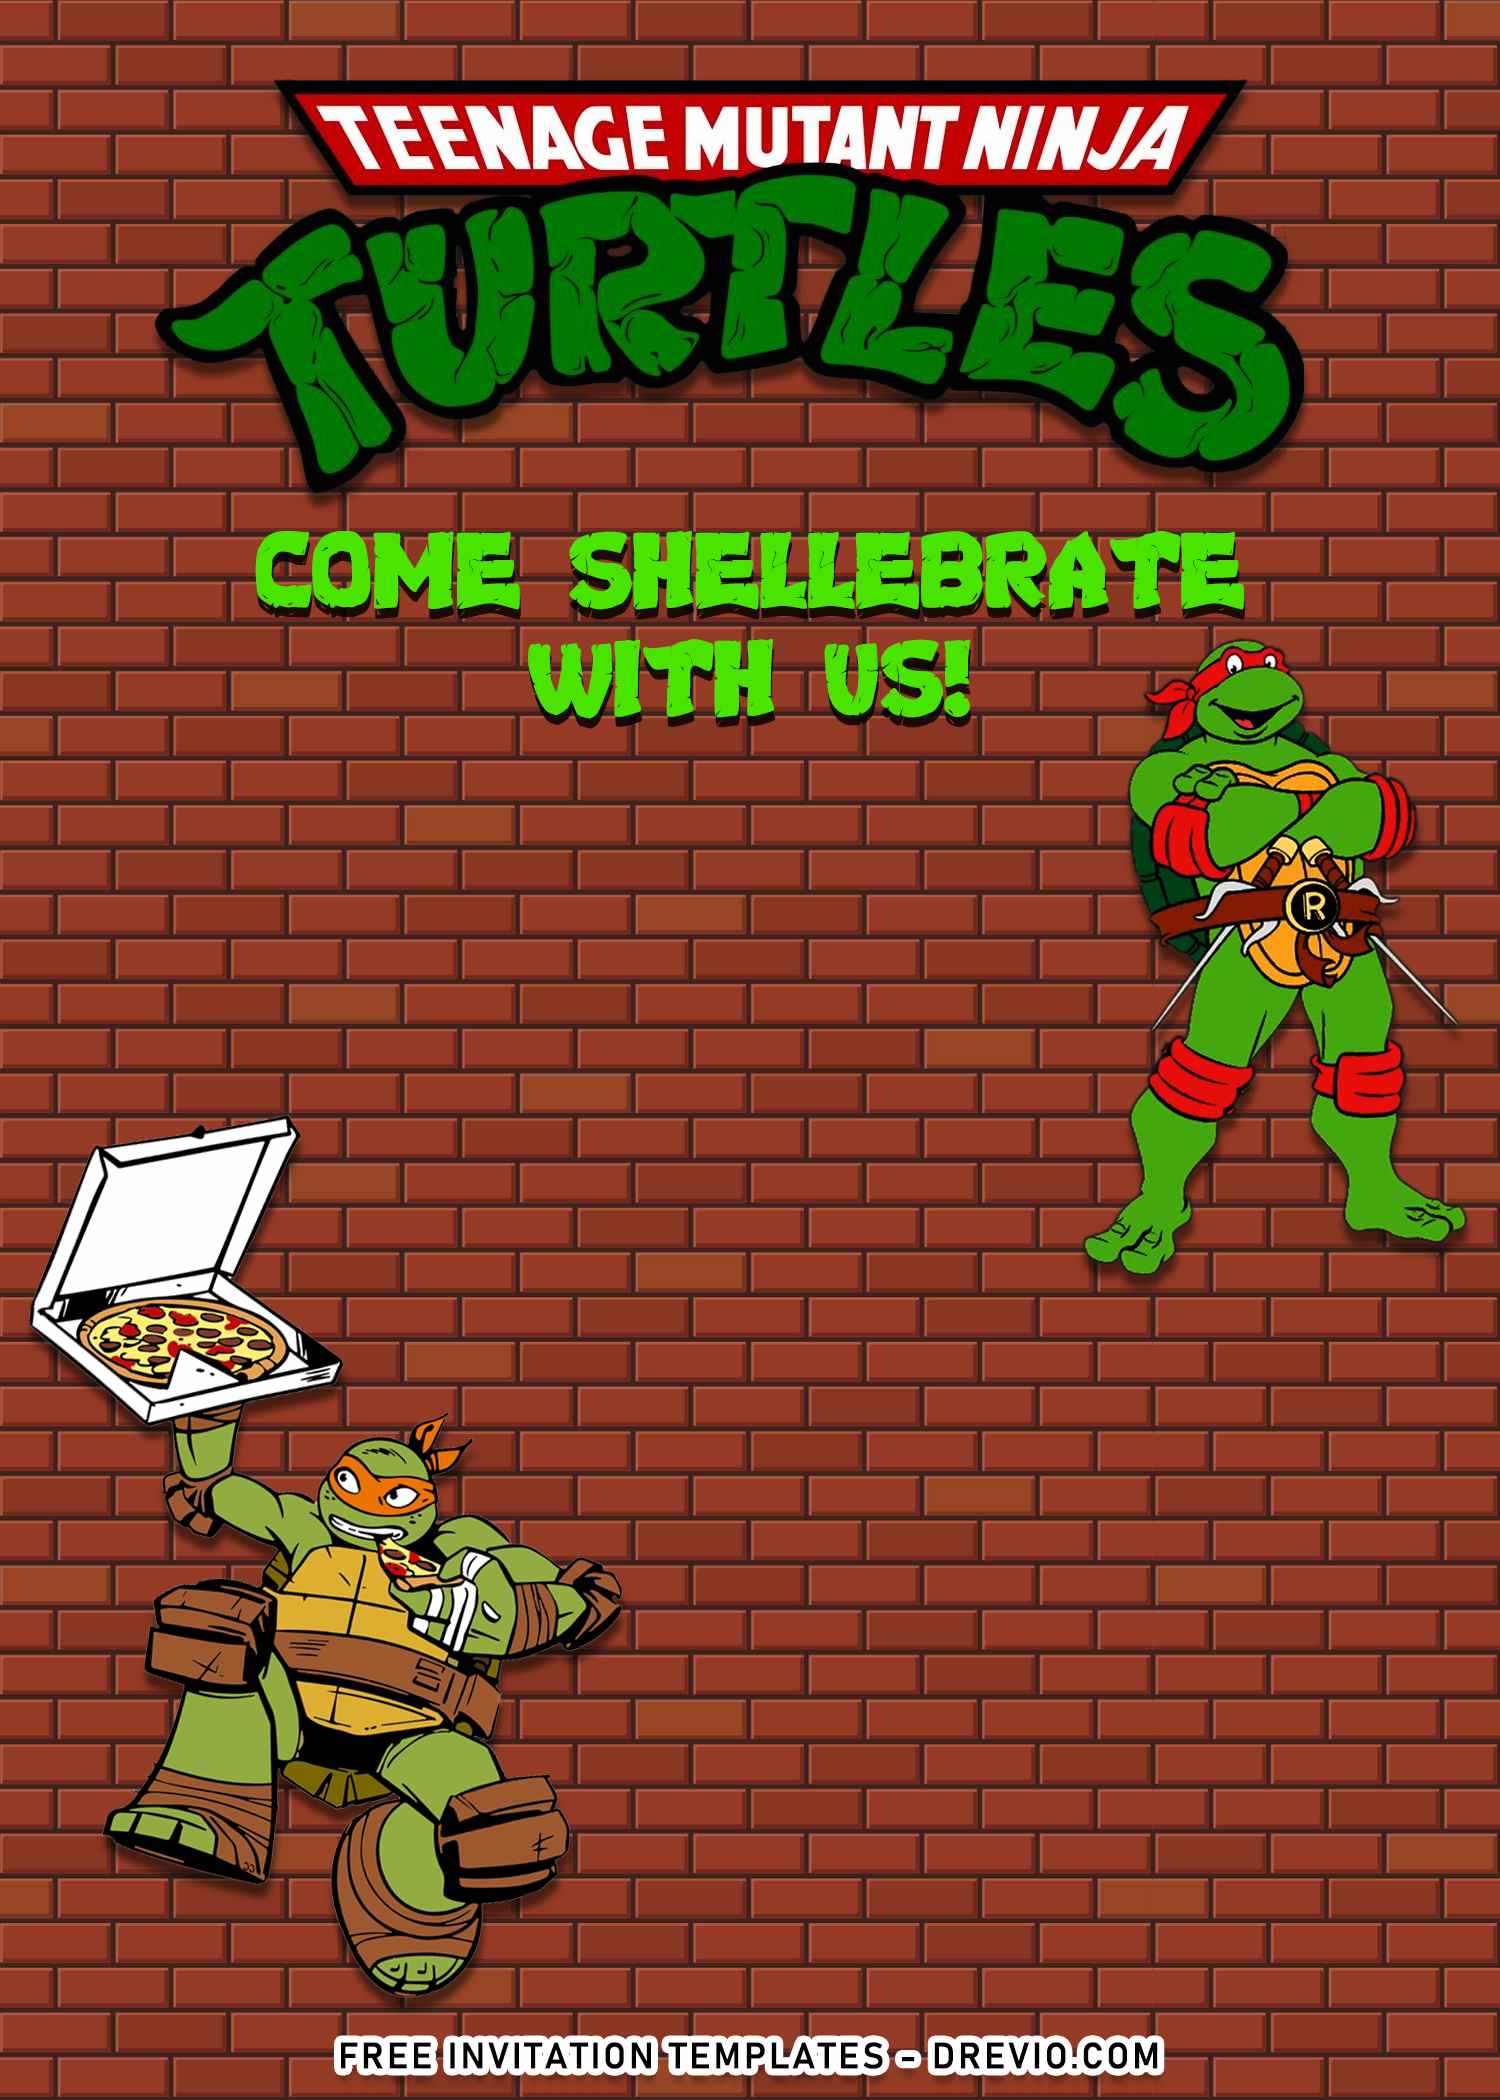 https://drevio.b-cdn.net/wp-content/uploads/2021/12/8-Awesome-Ninja-Turtle-Birthday-Invitation-Templates.jpg